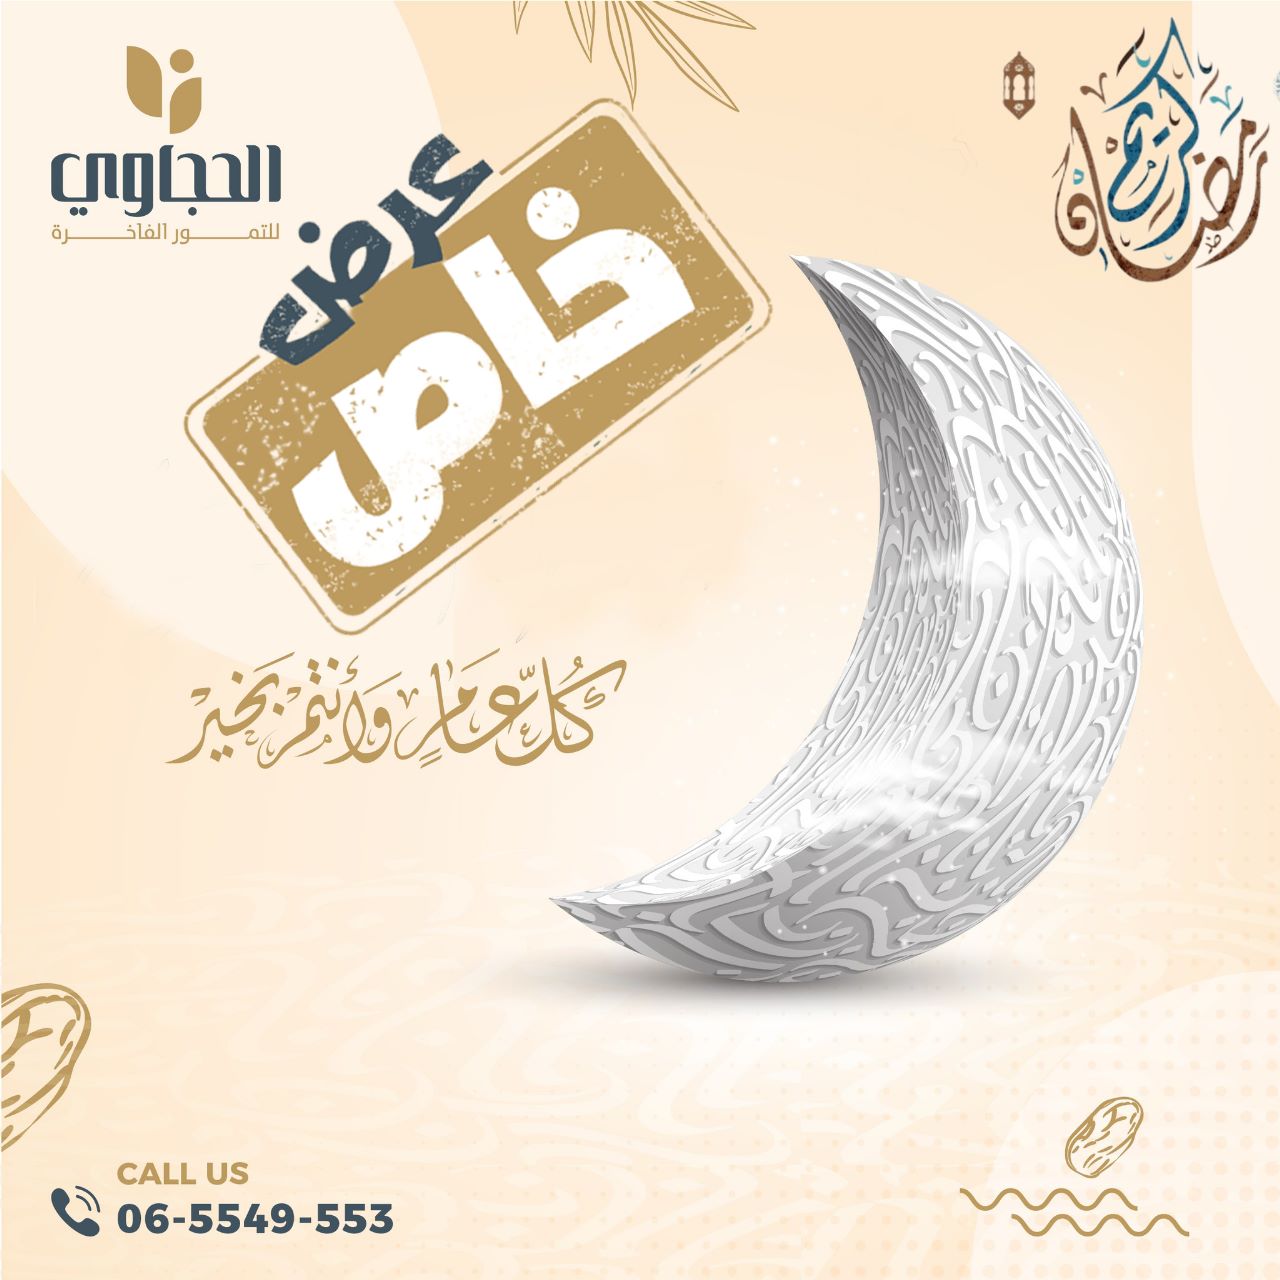 Al-Hijjawi Dates and Nuts (News of the Sunnah) Ramadan Kareem